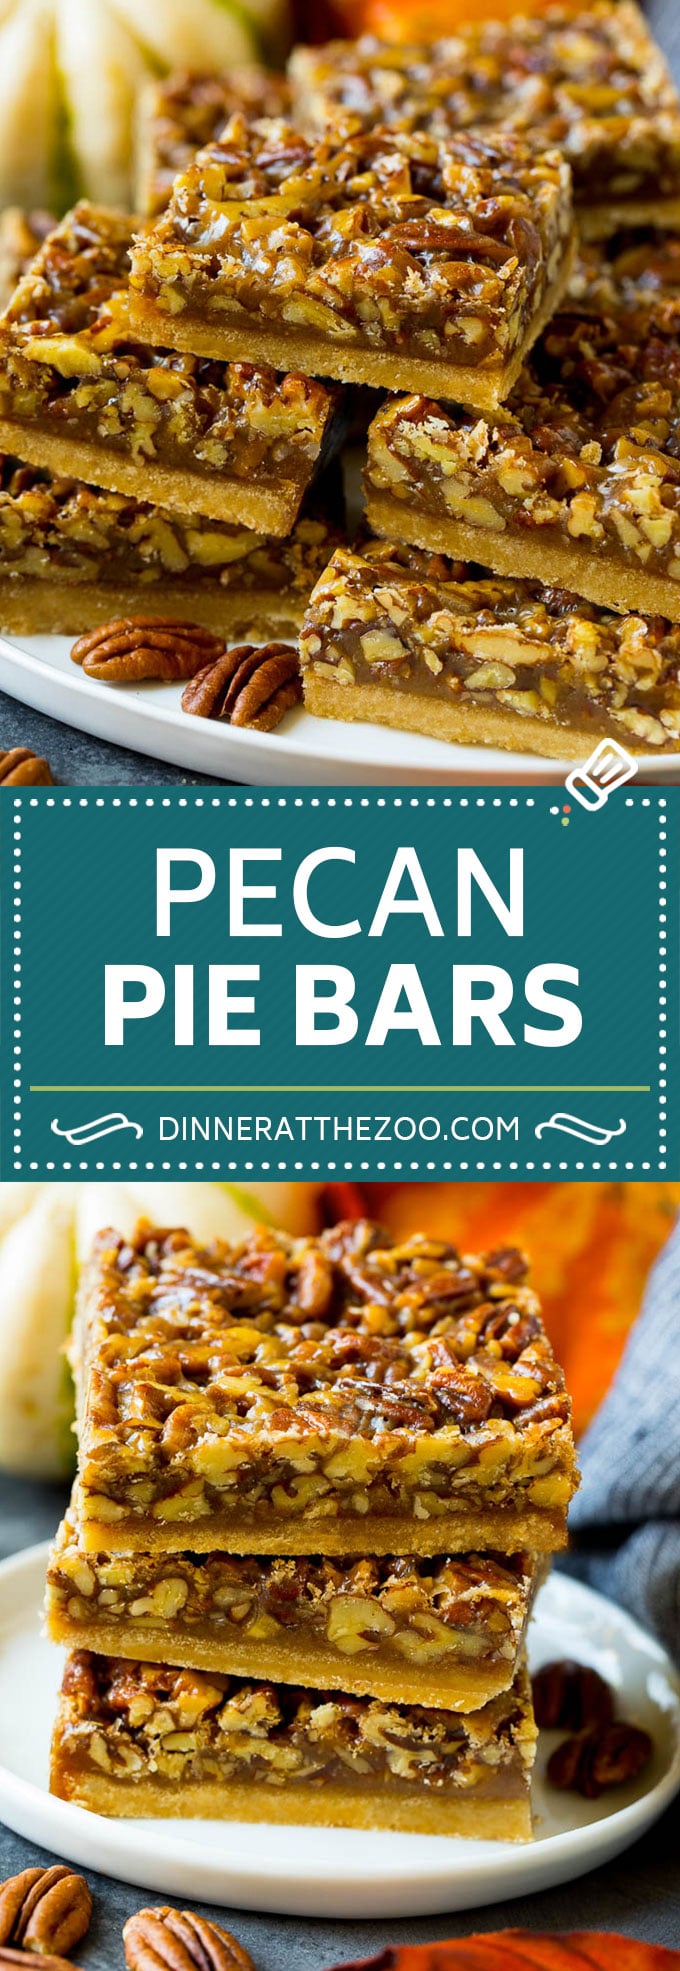 Pecan Pie Bars Recipe #pecans #pie #fall #pecanpie #dessert #thanksgiving #dinneratthezoo